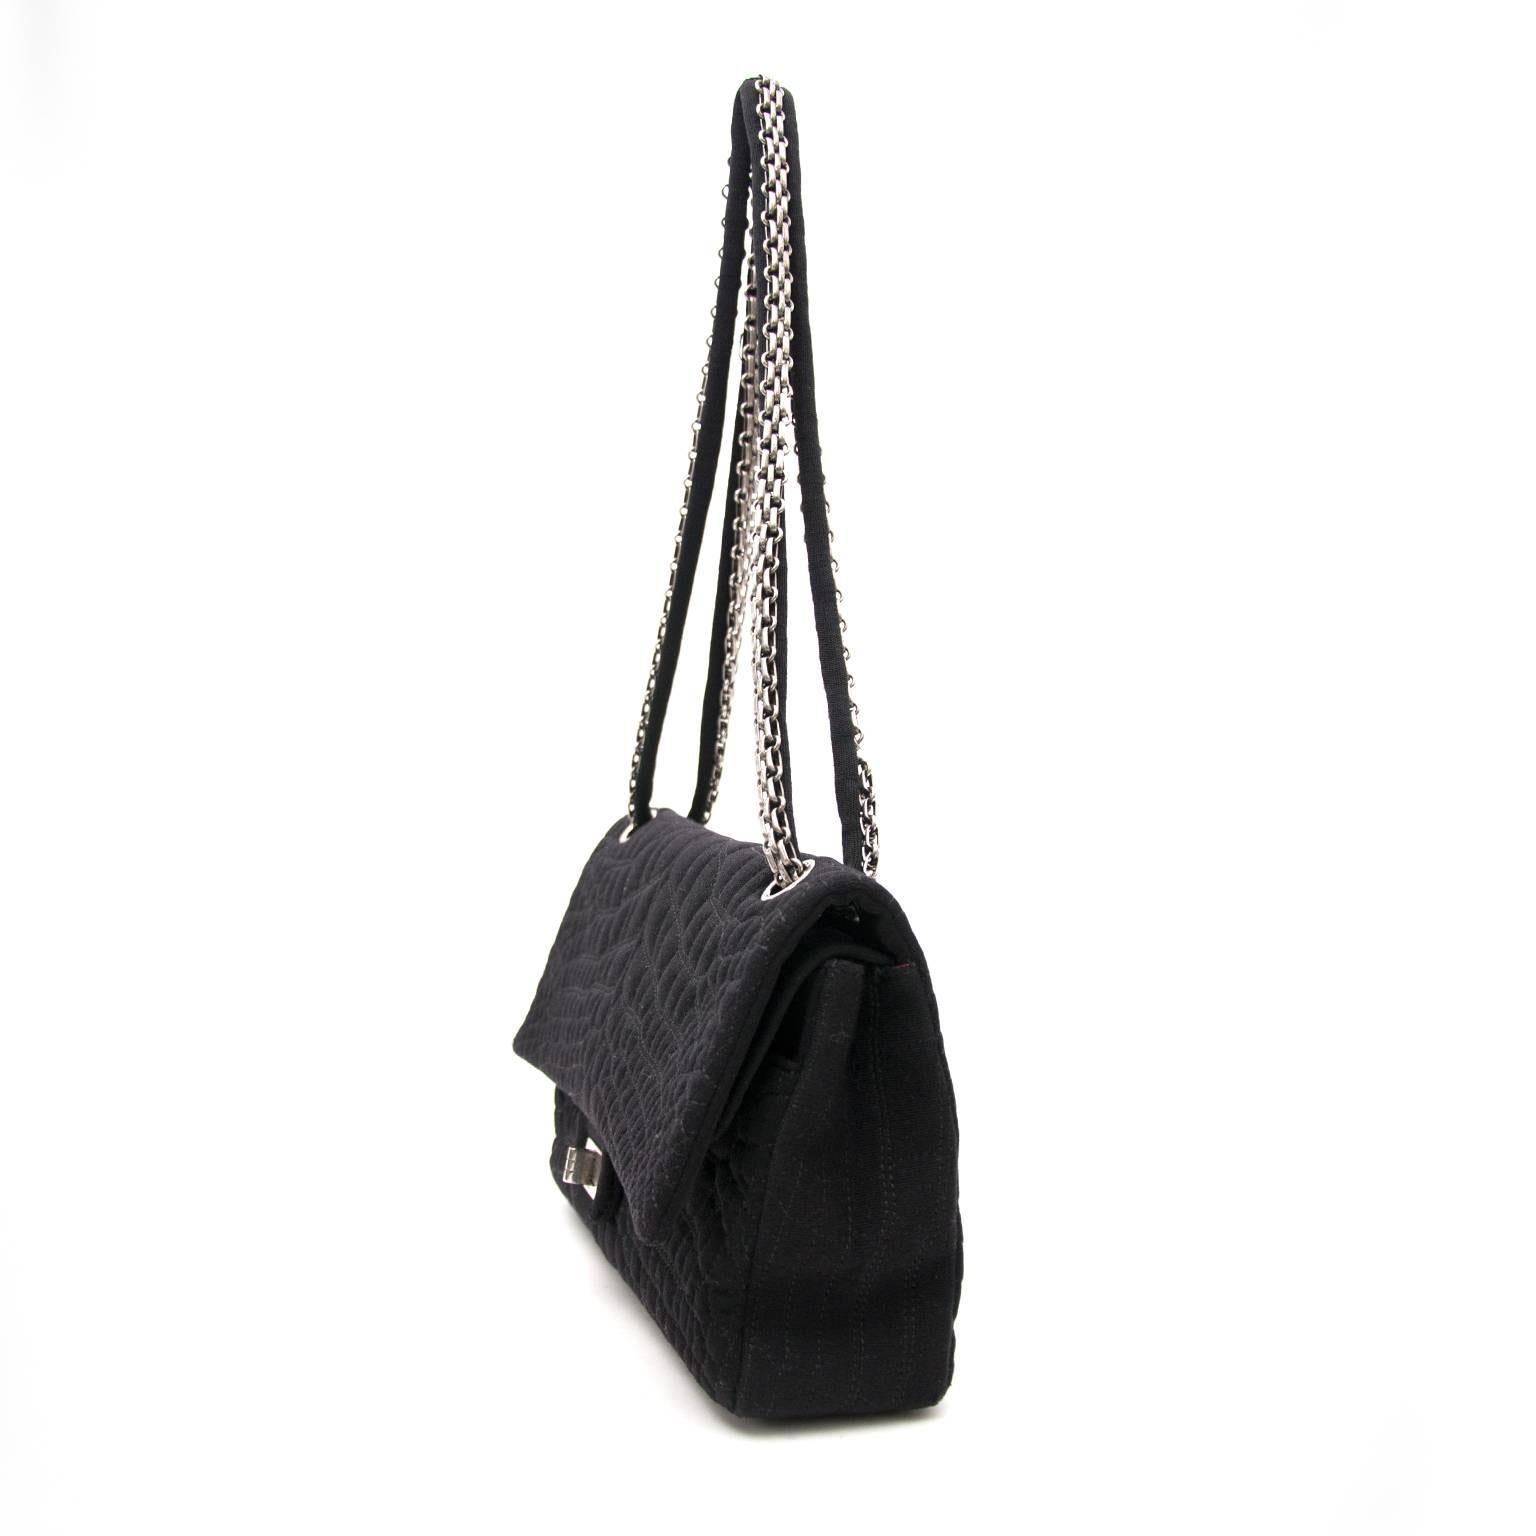 Women's or Men's Chanel Large 2.55 Black Fabric Bag